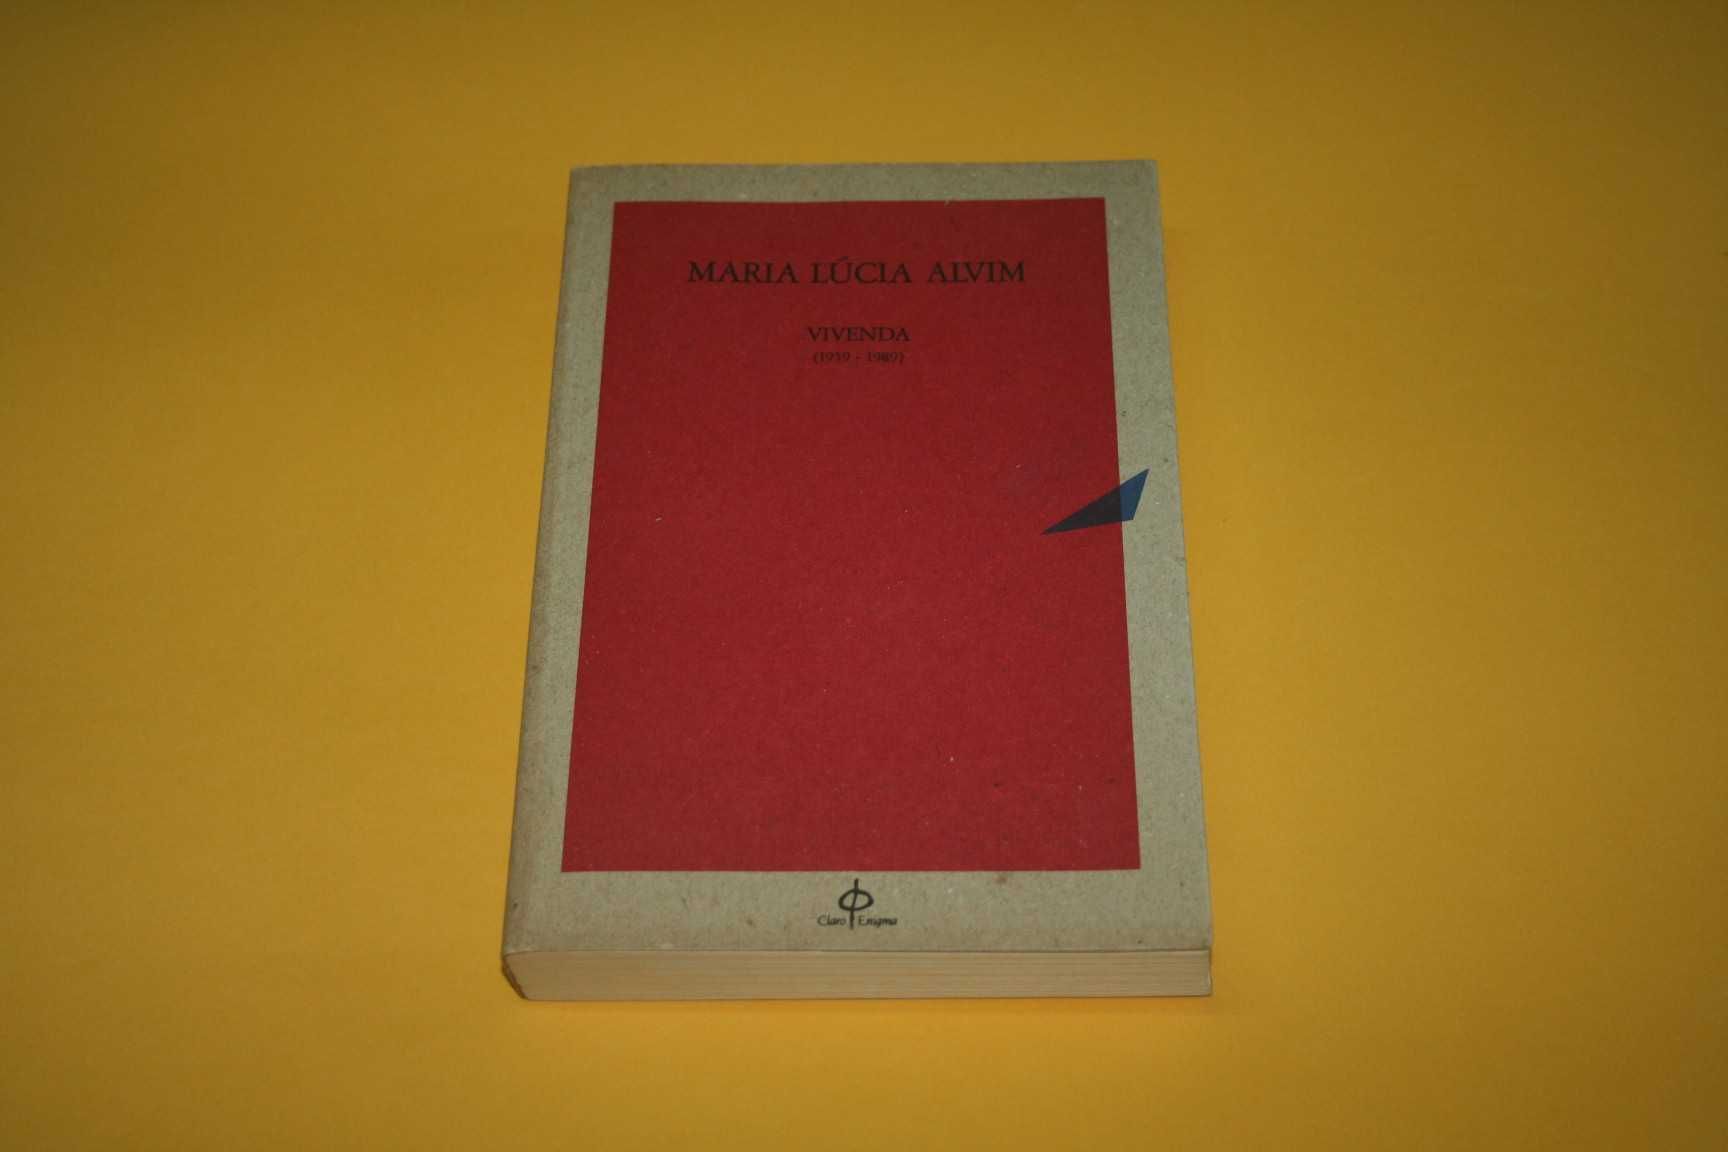 [] Vivenda (1959/1989) - Maria Lúcia Alvim